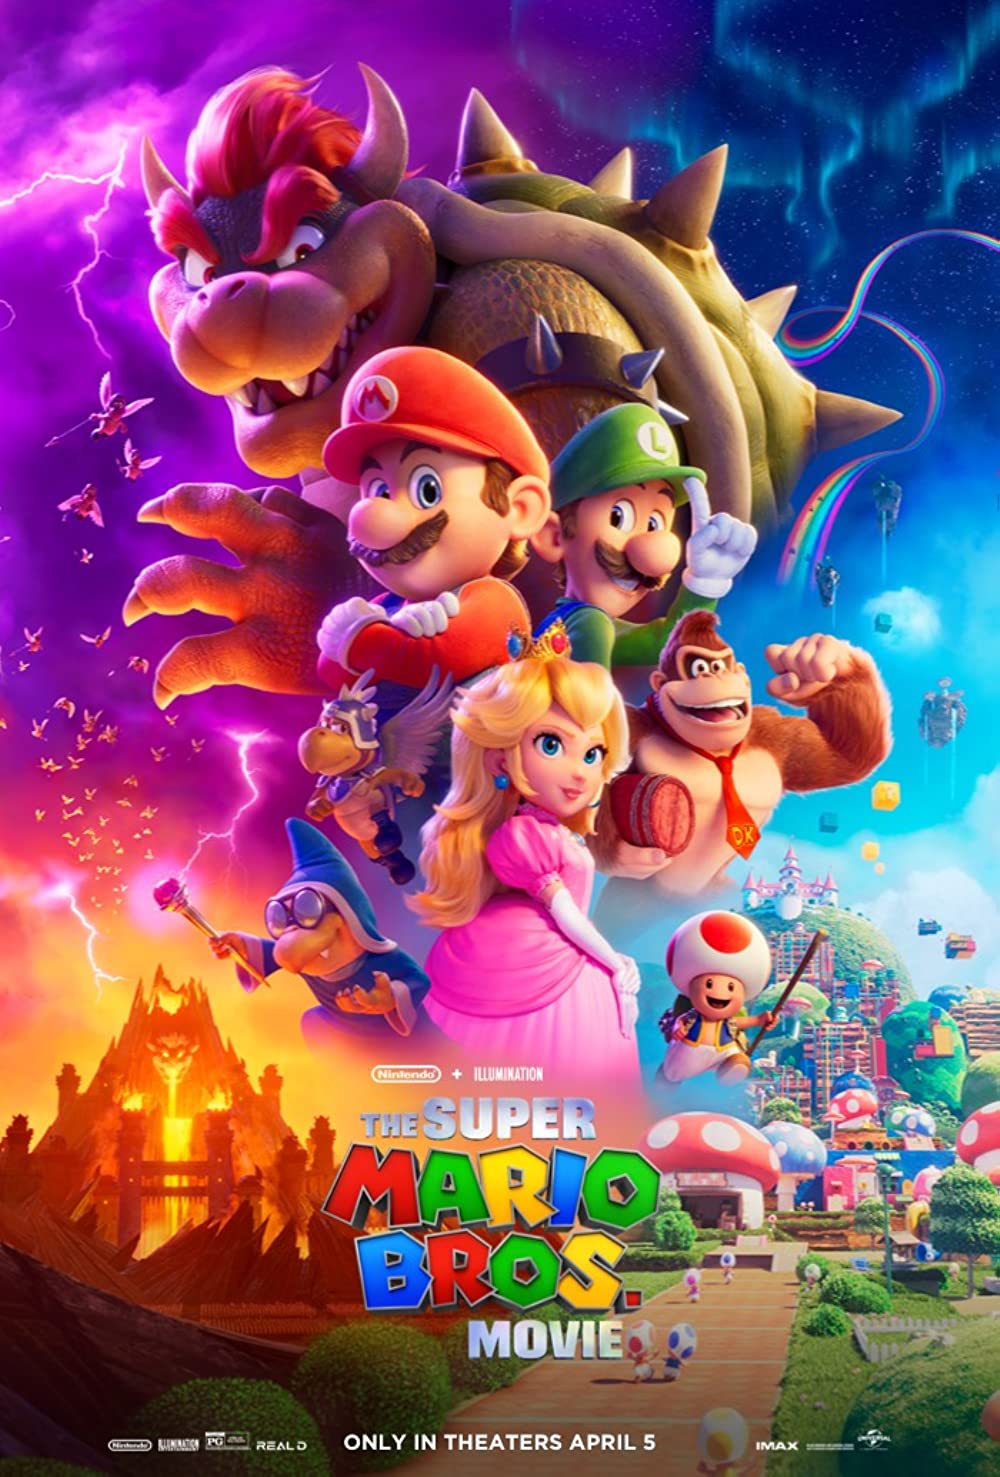 A Review of “The Super Mario Bros. Movie”